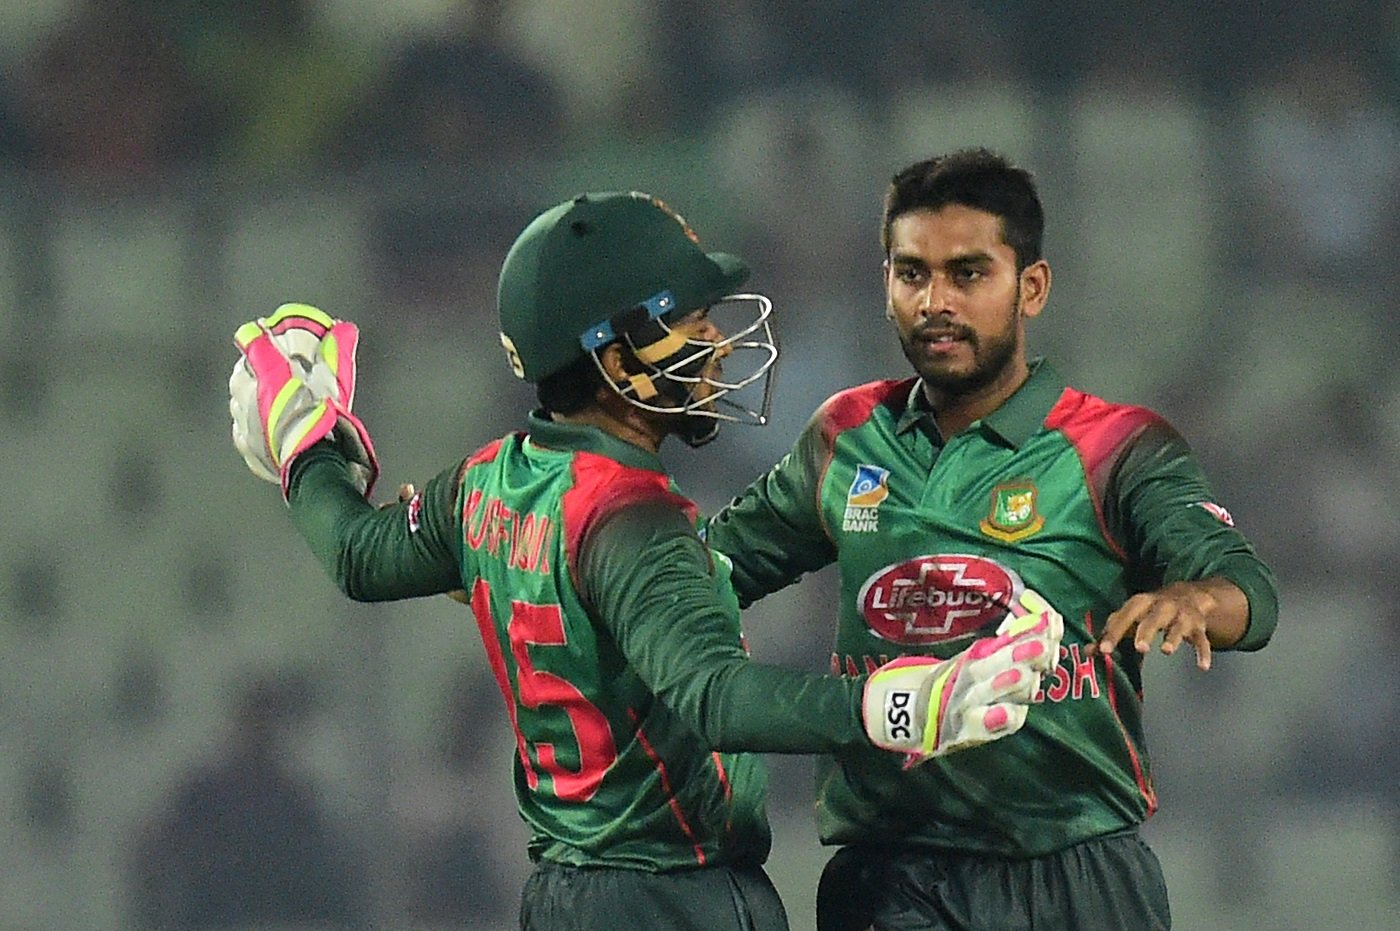 BangladeshI cricketer Mehidy Hasan (R) celebrates with teammate Mushfiqur Rahim (L) (Photo by MUNIR UZ ZAMAN / AFP)